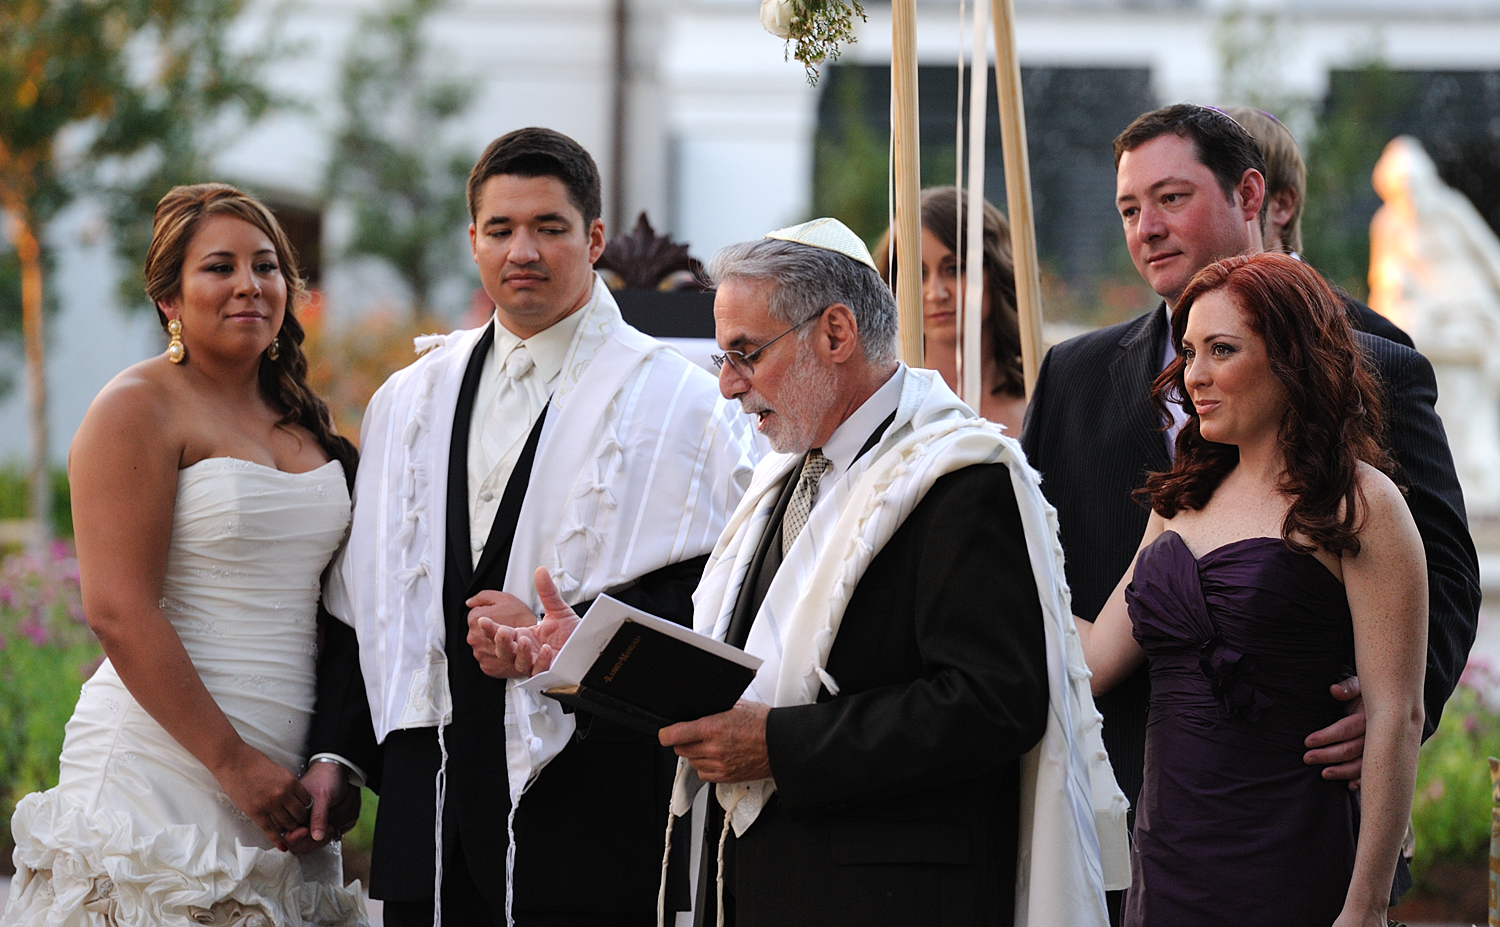 a Jewish wedding, which I